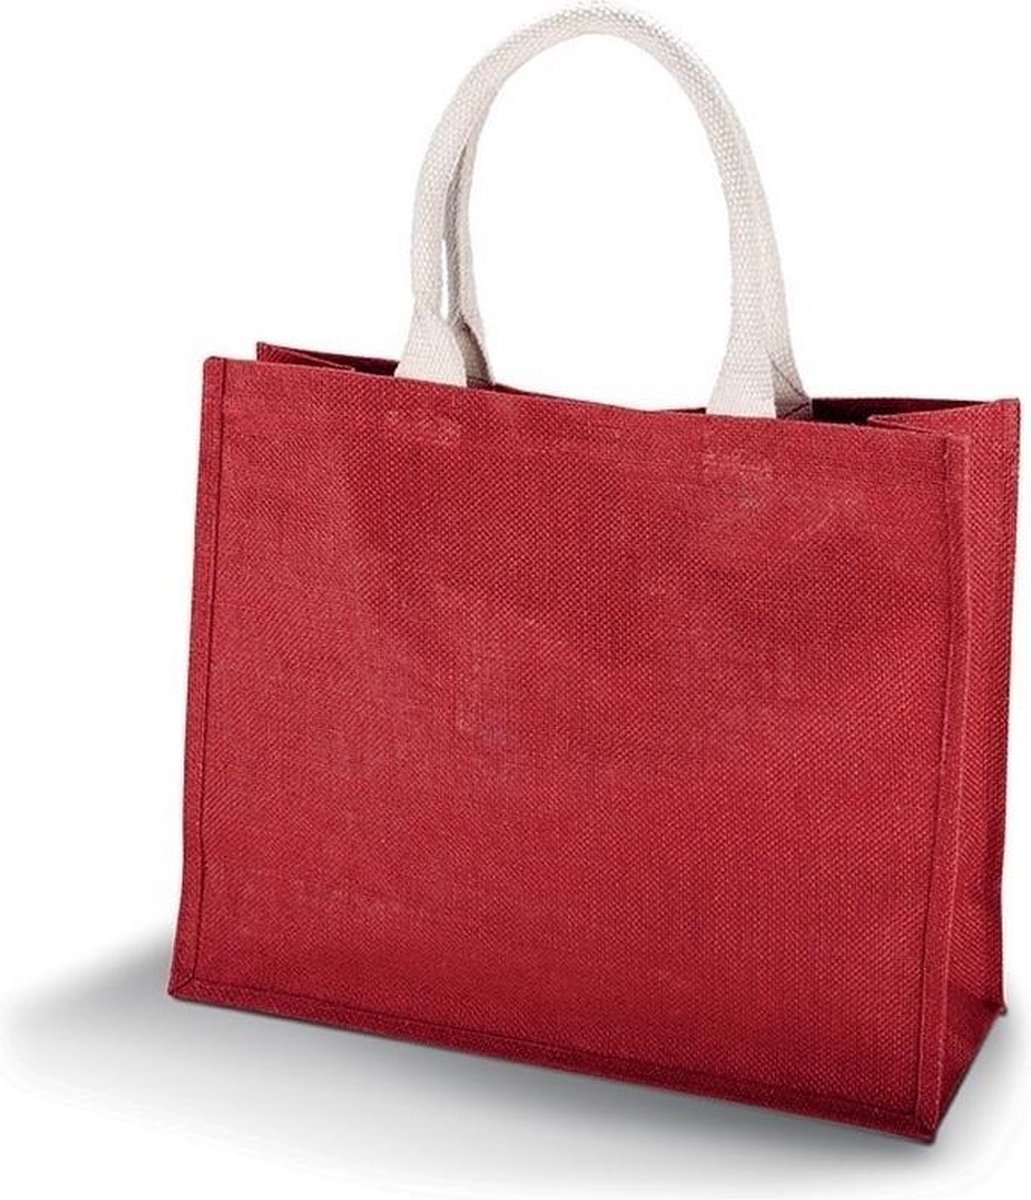 Jute rode shopper/boodschappen tas 42 cm - Stevige boodschappentassen/shopper bag - Kimood